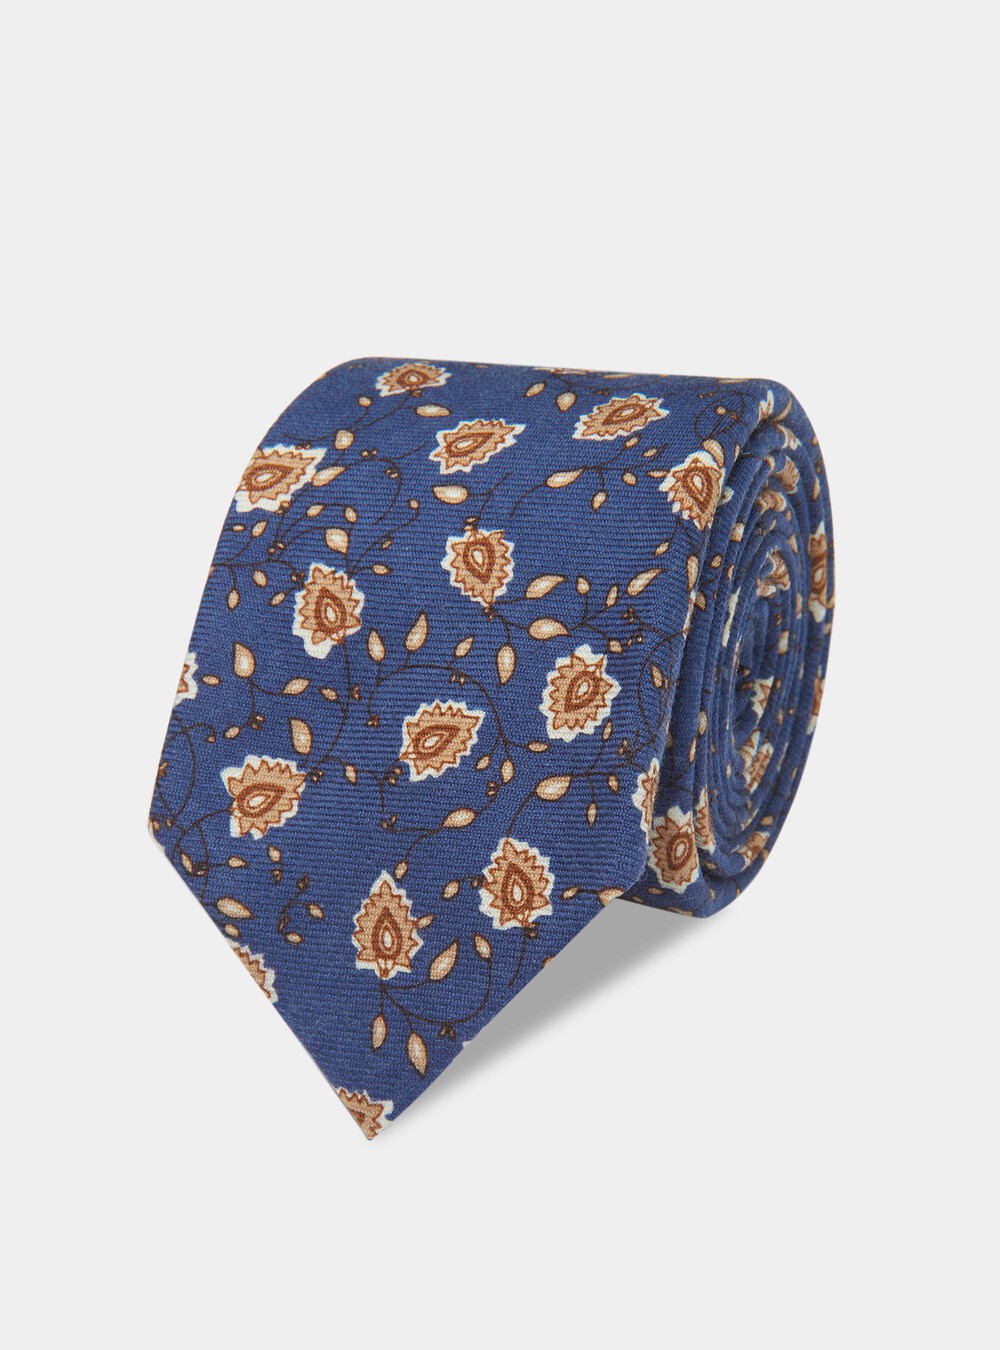 Cravatta fiori 100% lana | Gutteridge | Accessori Uomo